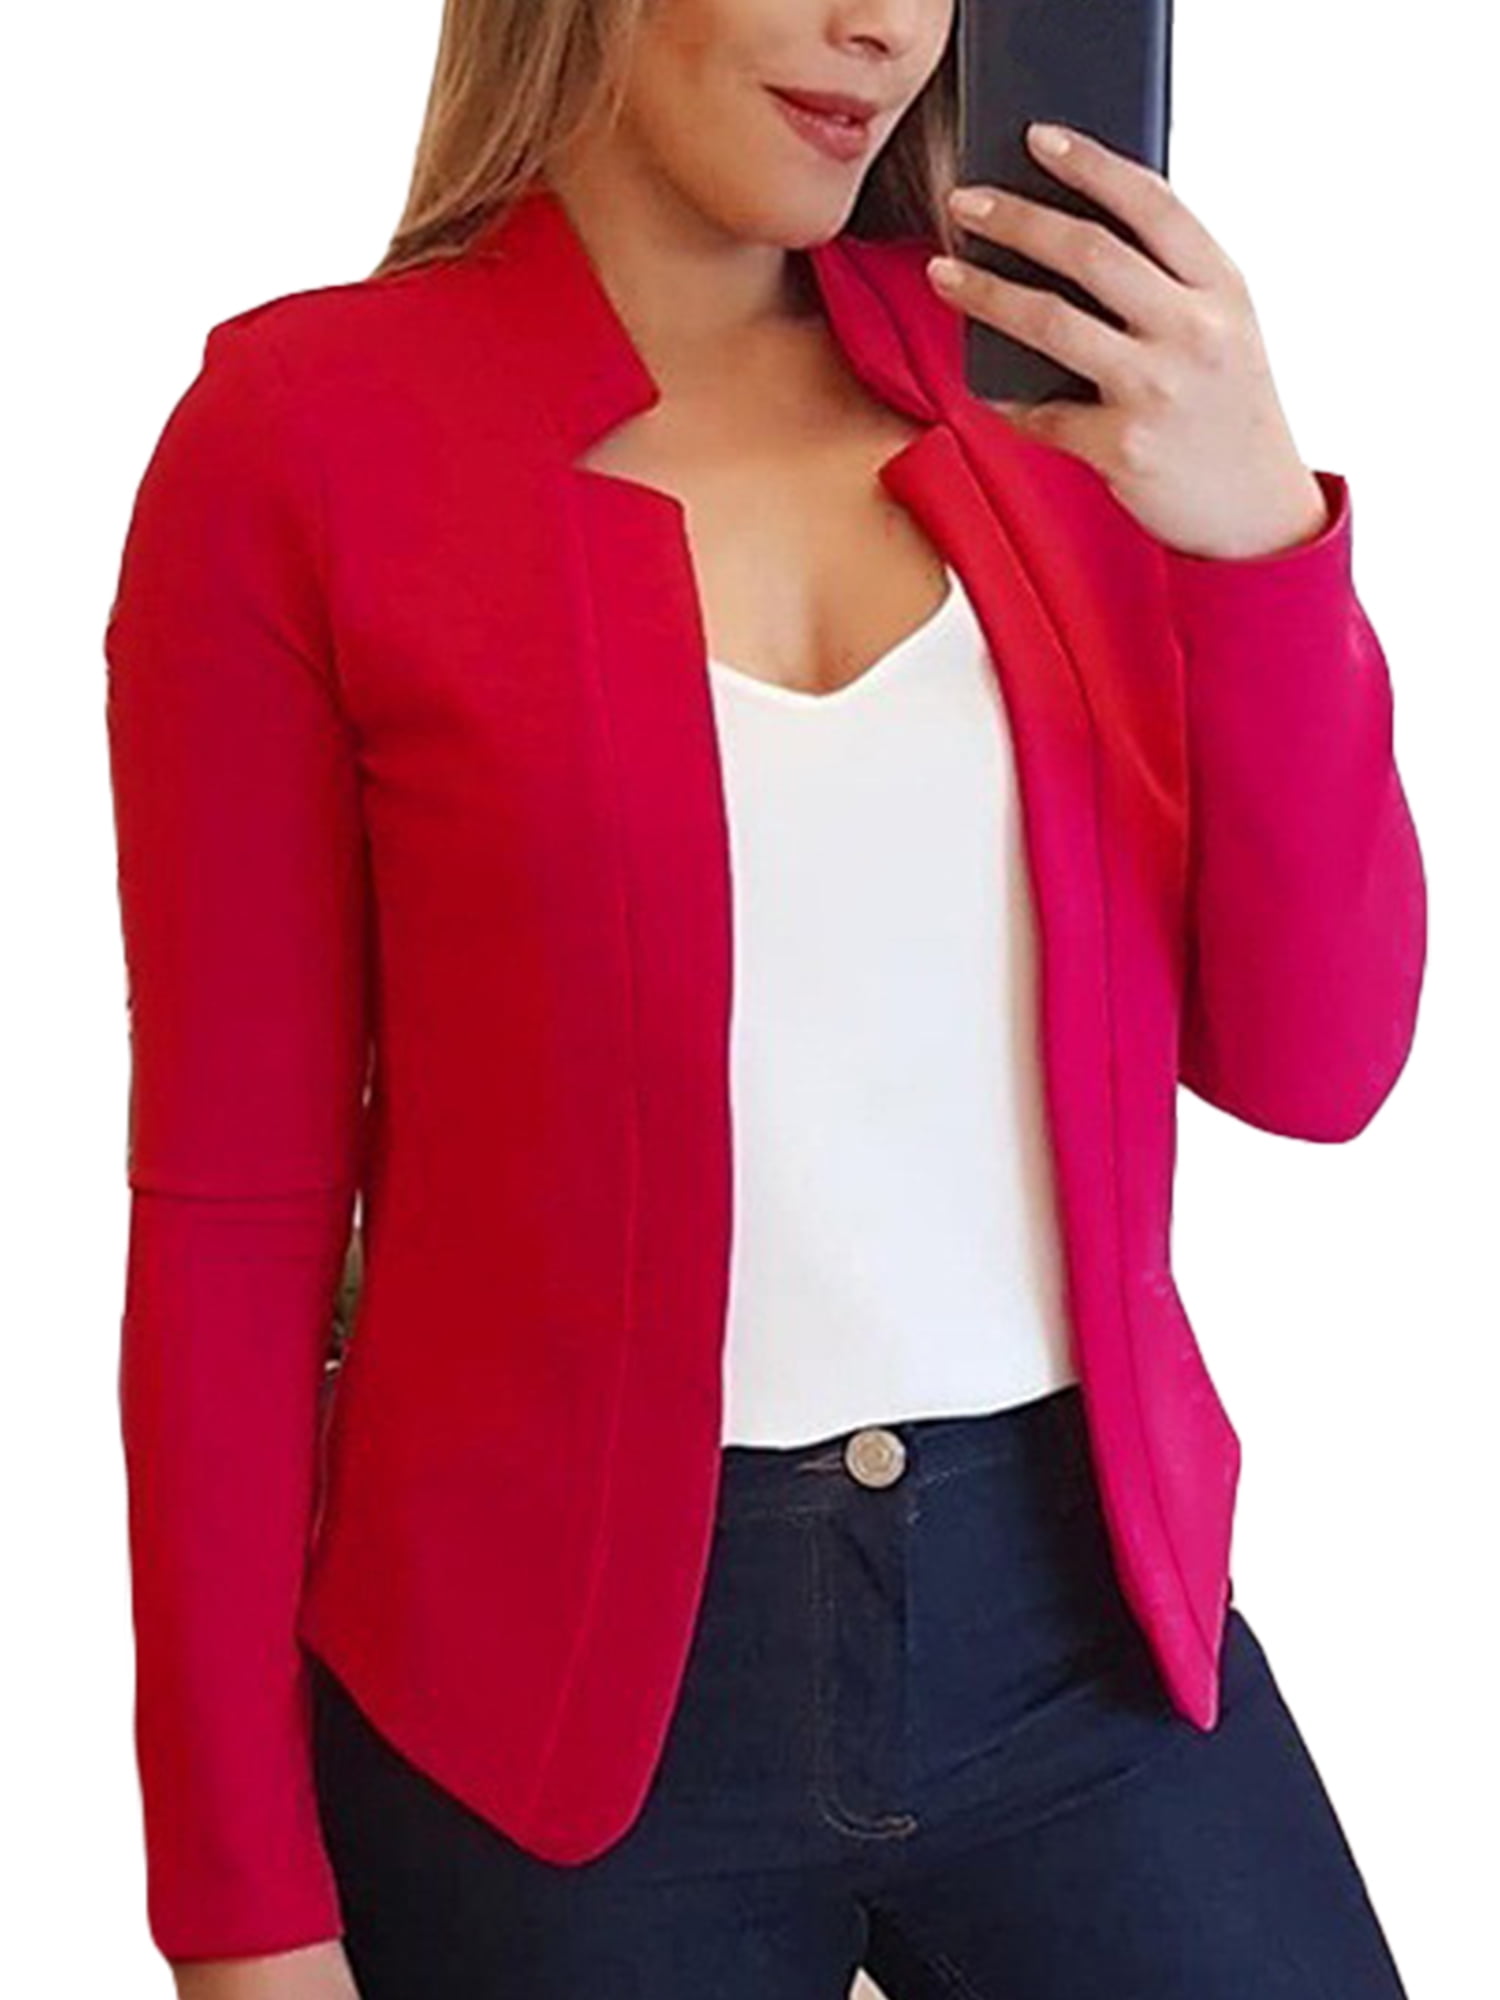 Women's Business Blazers Jacket Casual Petite Formal 3/4 Sleeve Outwear Printed Blazer Coat Cardigan Work Office Suits